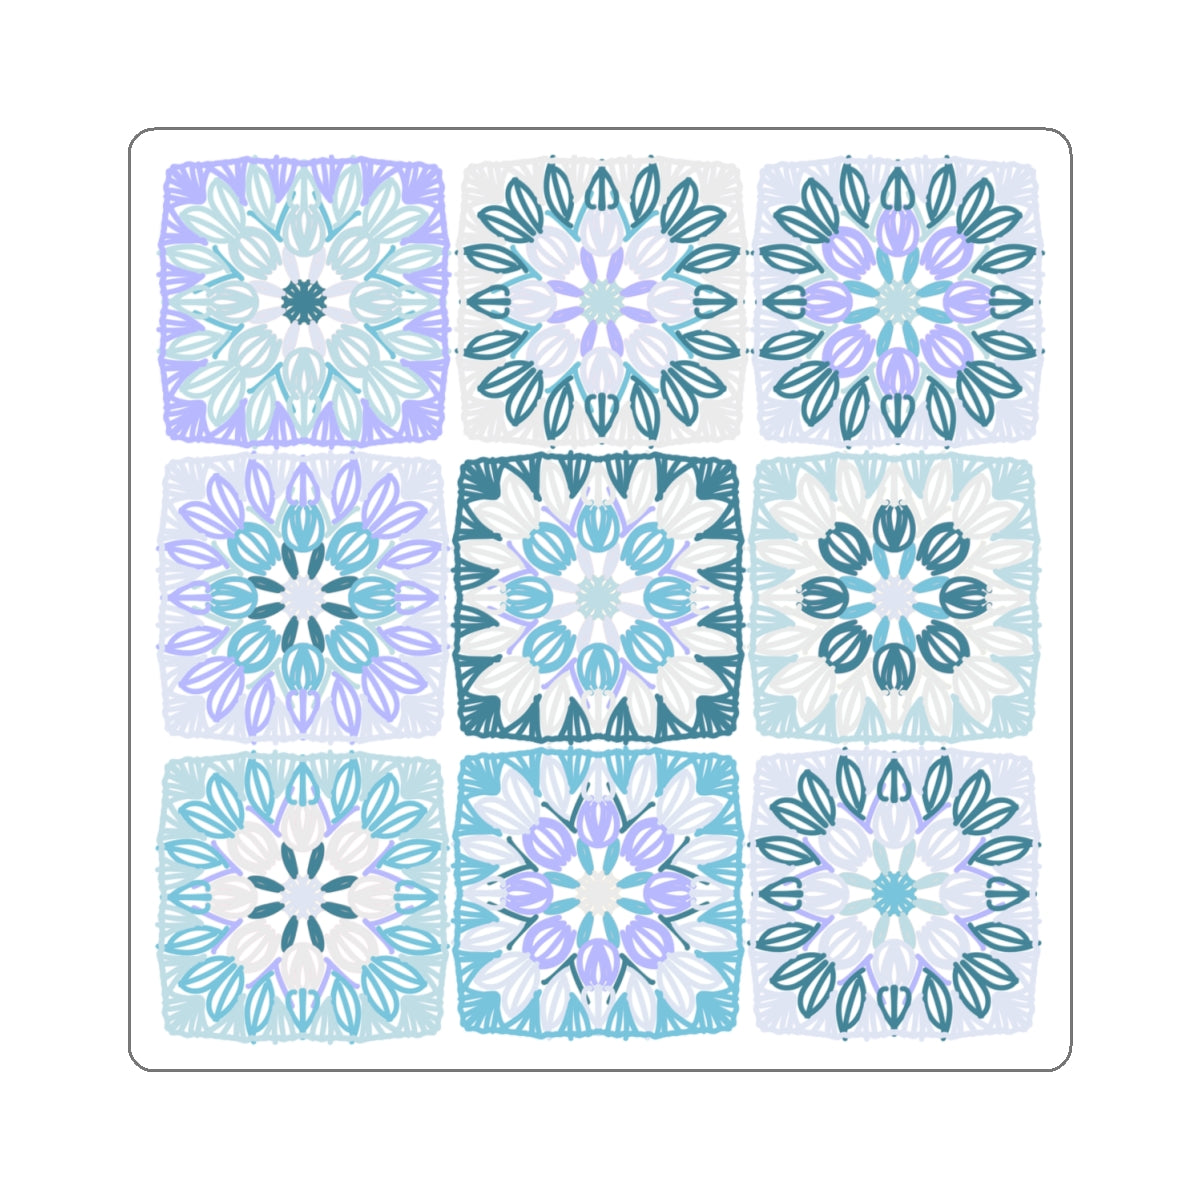 Granny Square in Blueberry Milk | Kiss-Cut Stickers | Crochet | Yarn | Knit | Craft